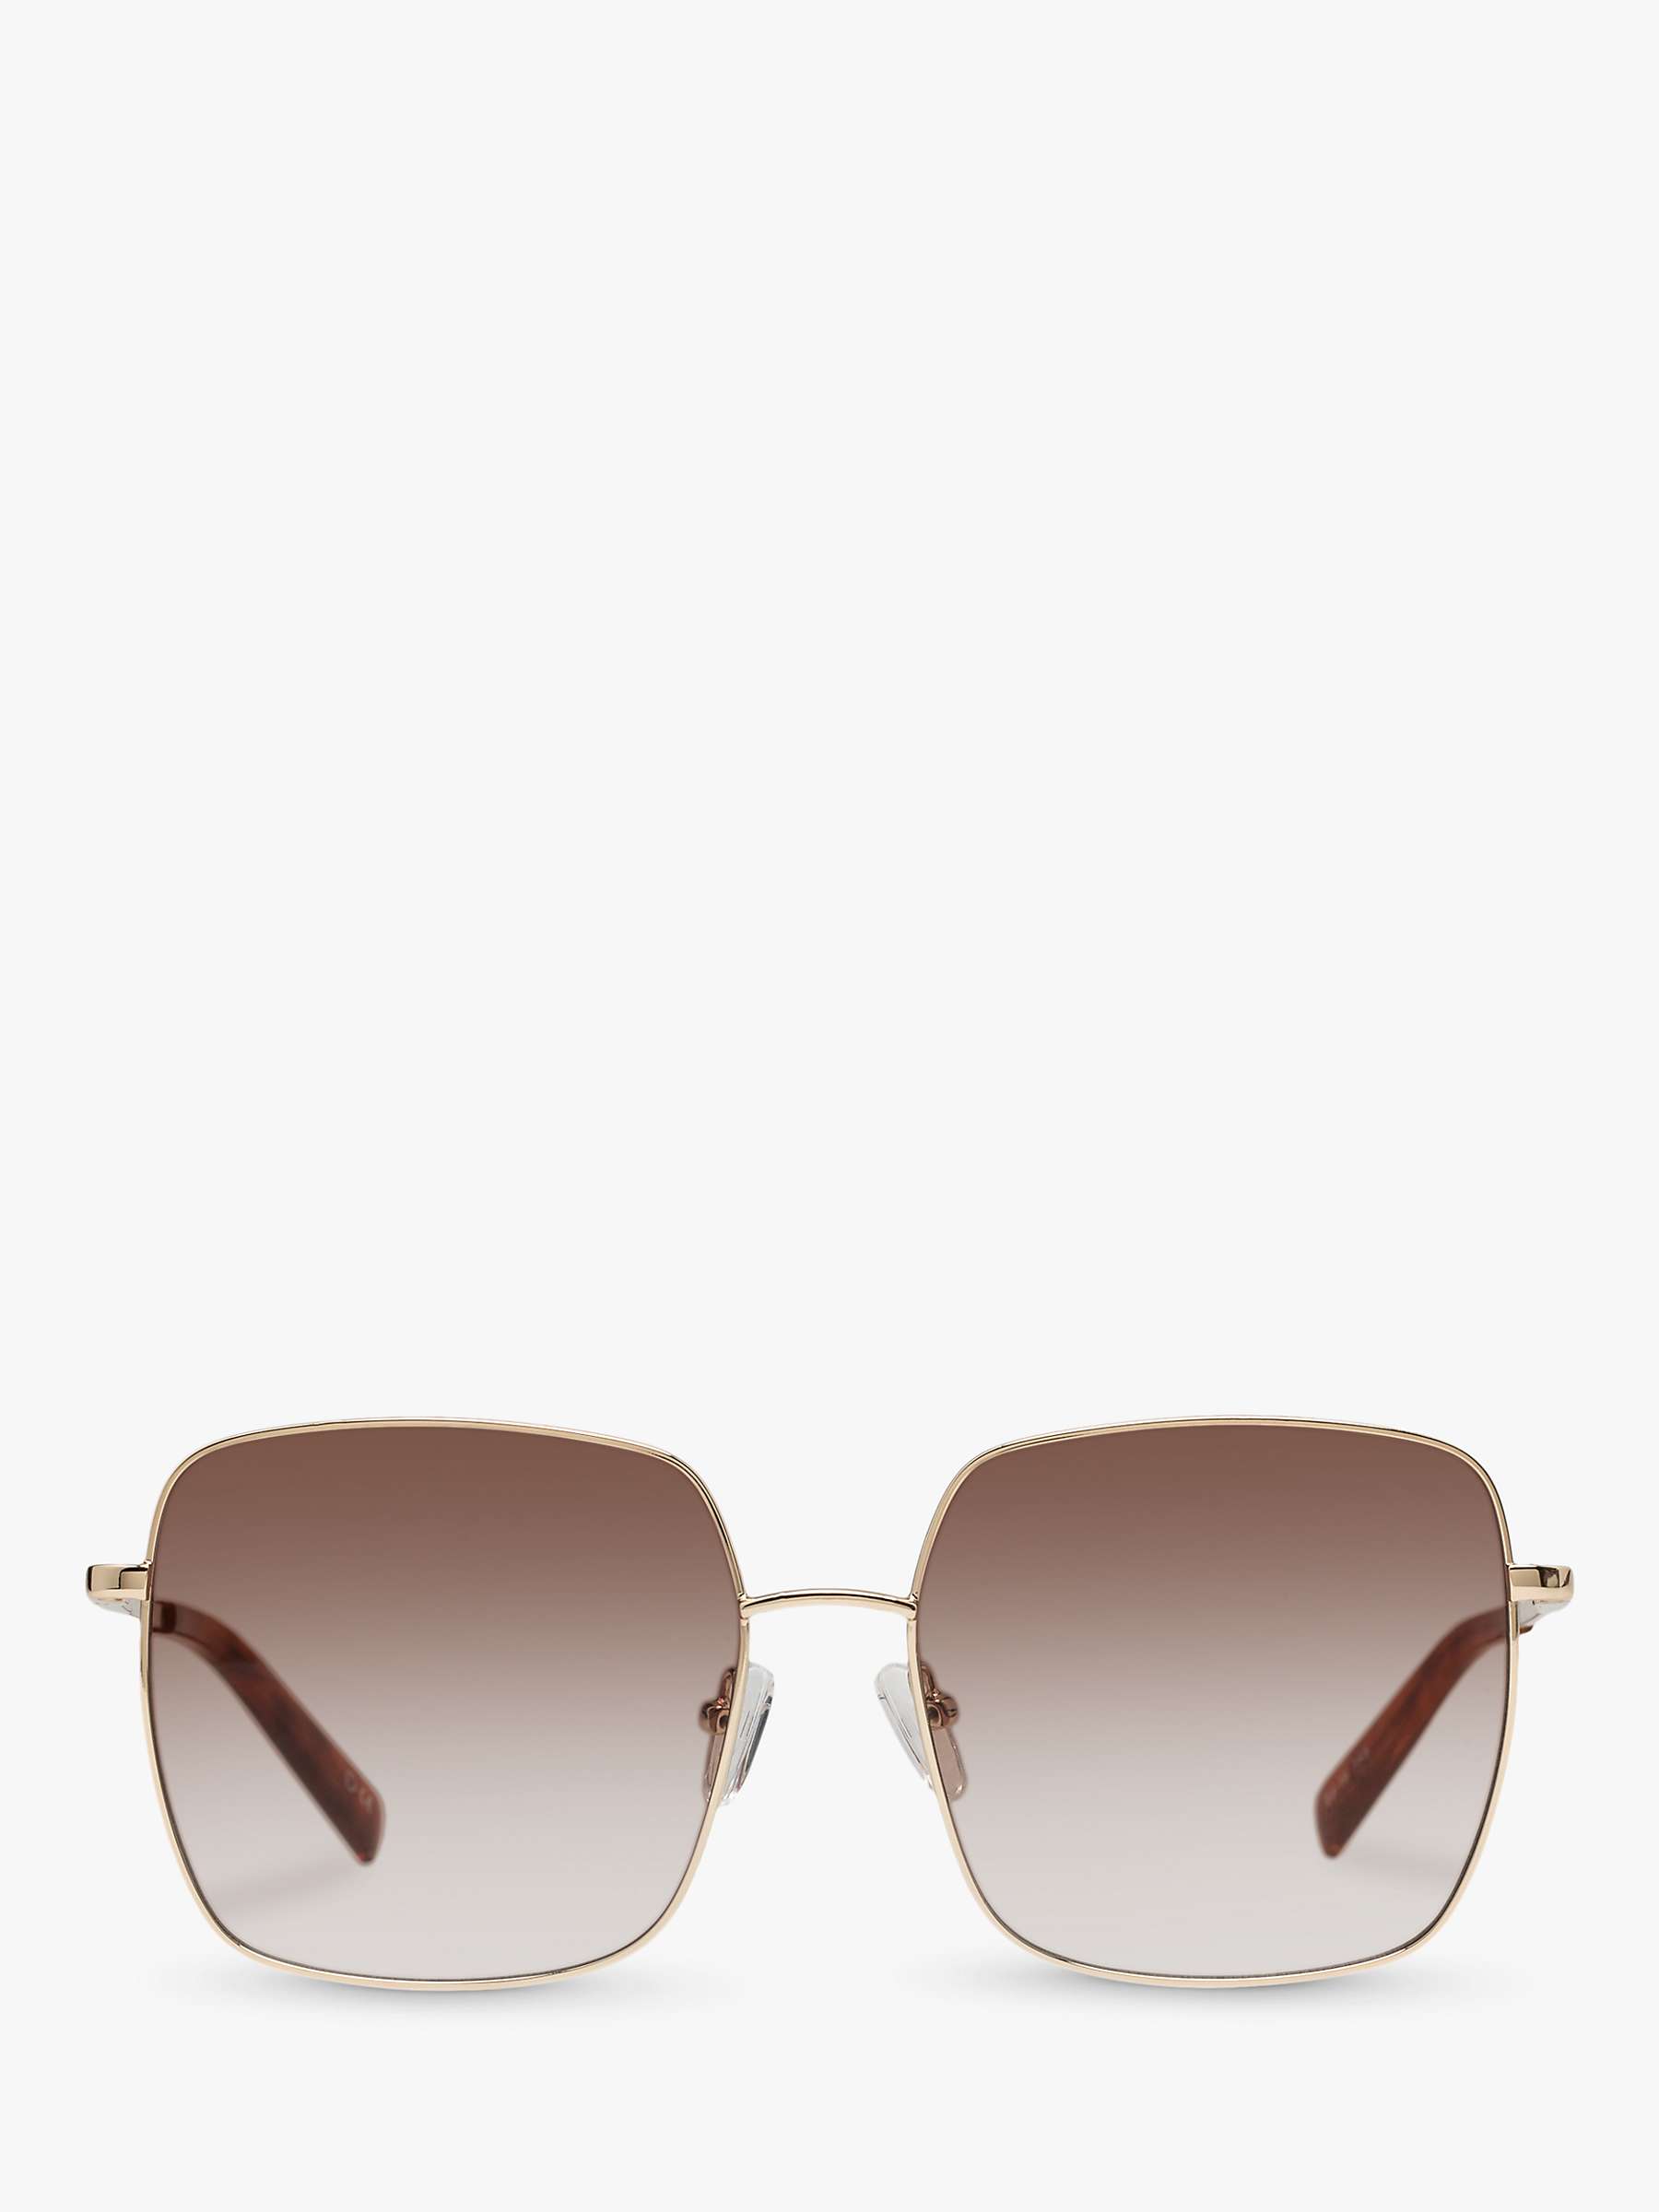 Buy Le Specs L5000184 Women's The Cherished Square Sunglasses, Gold/Brown Gradient Online at johnlewis.com